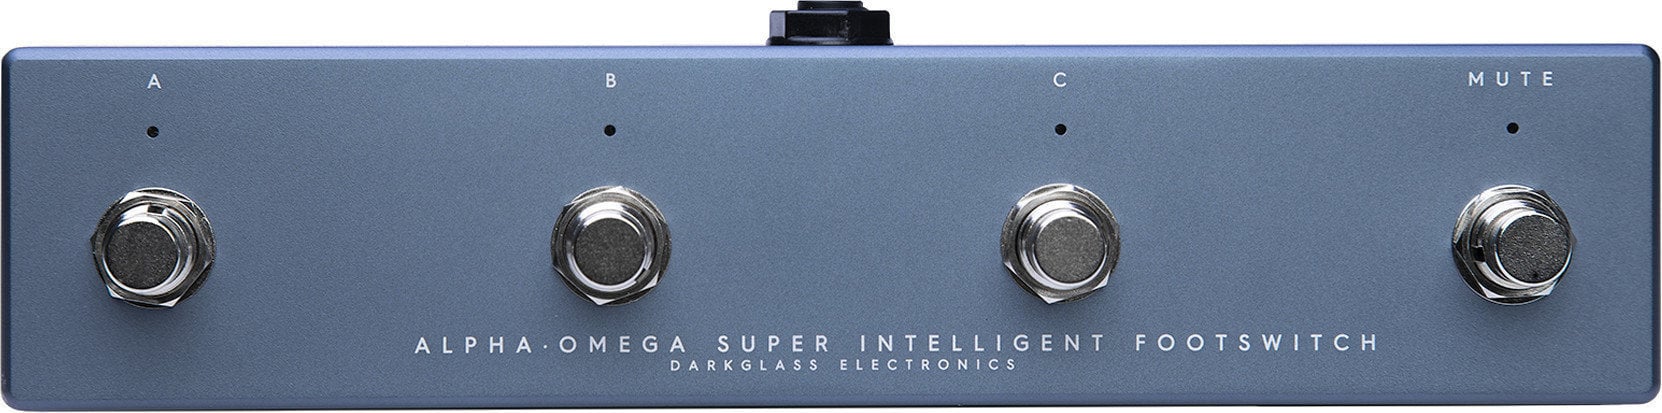 Darkglass Alpha Omega Super Intelligent Pédalier pour ampli guitare Grey